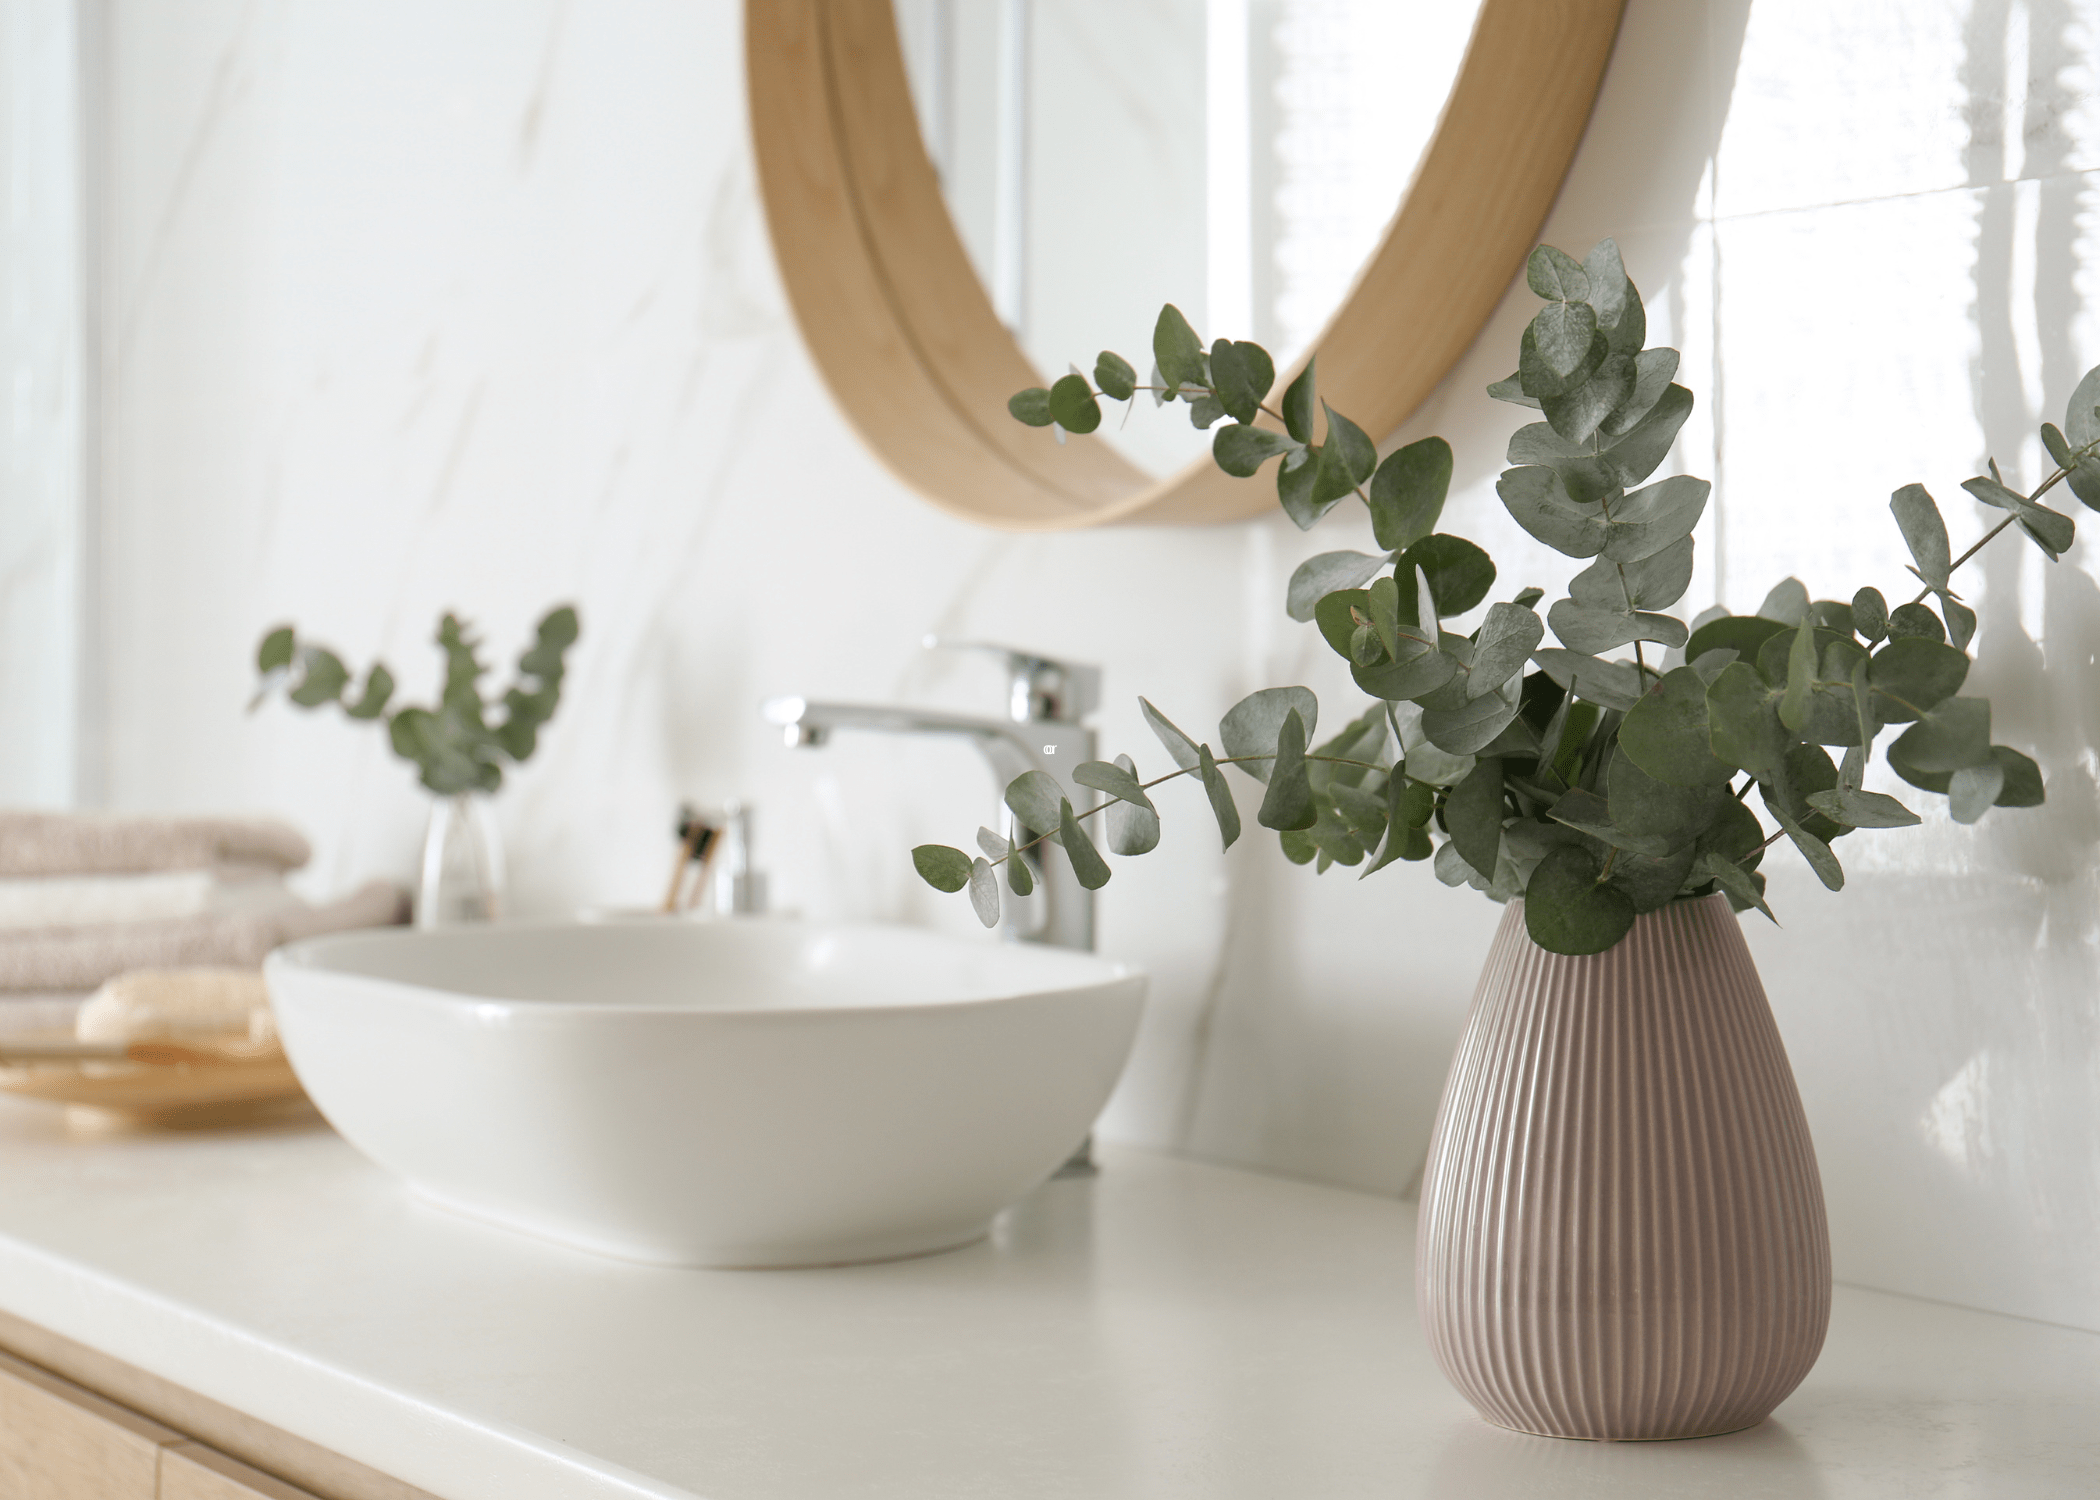 eucalyptus on bathroom counter with white bowl sink